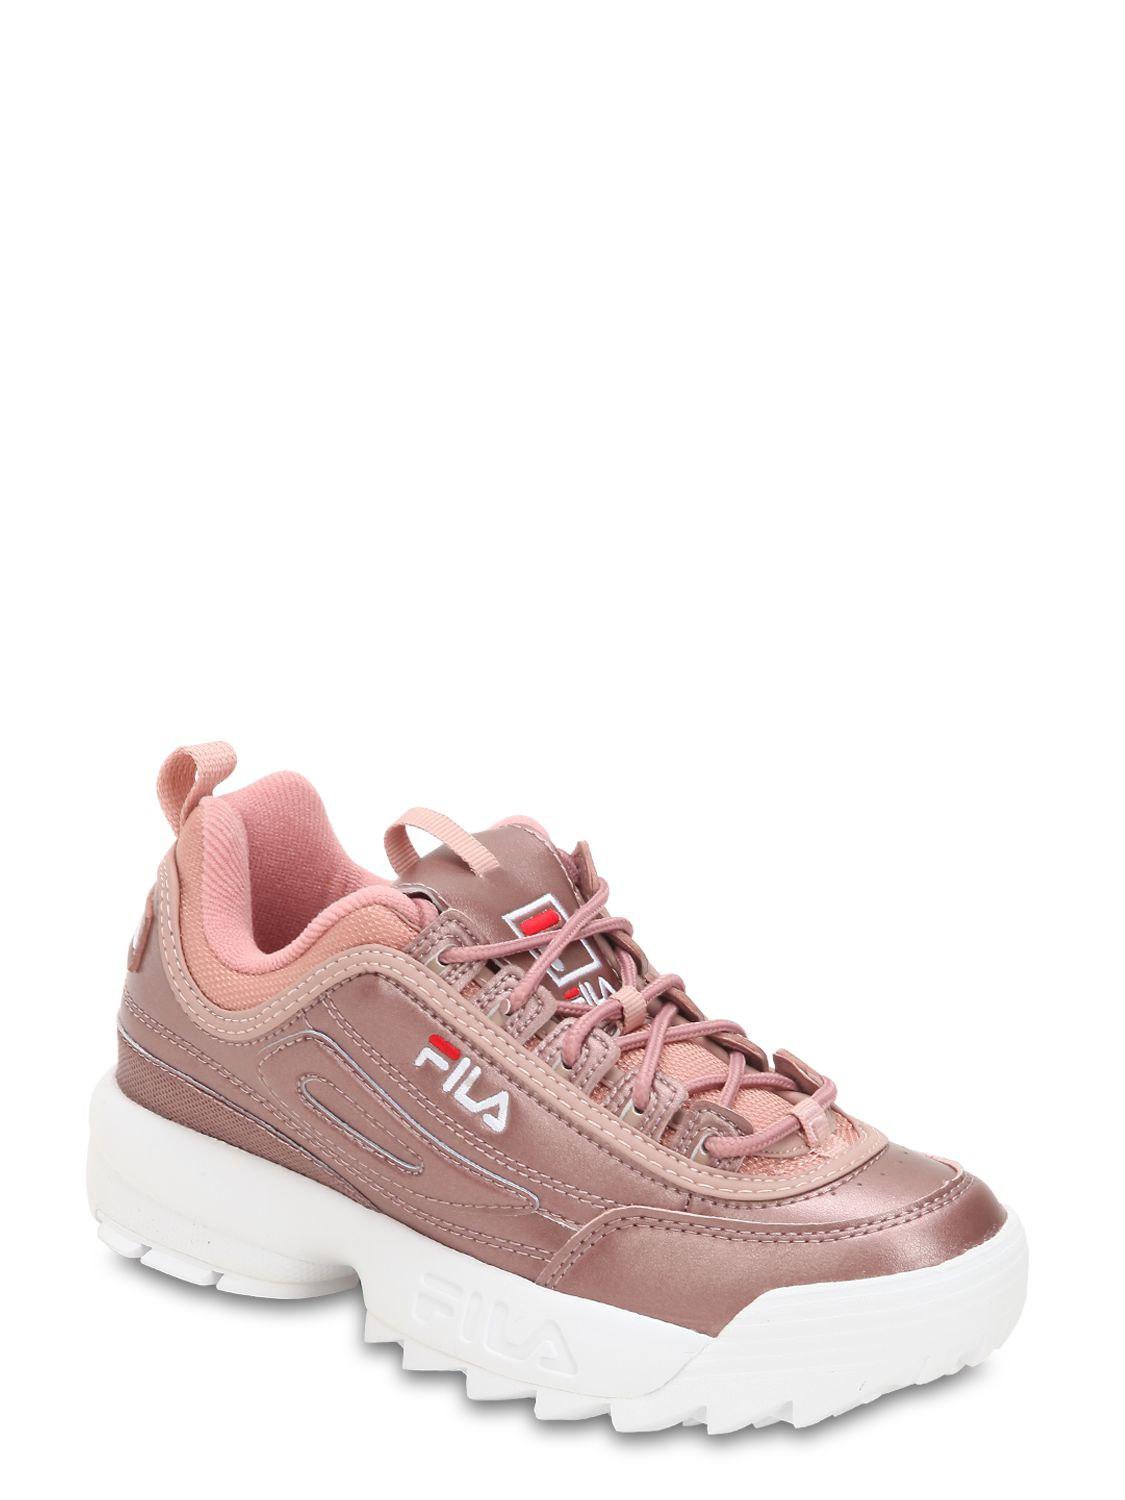 Fila Disruptor Leather Platform Sneakers in Pink - Lyst